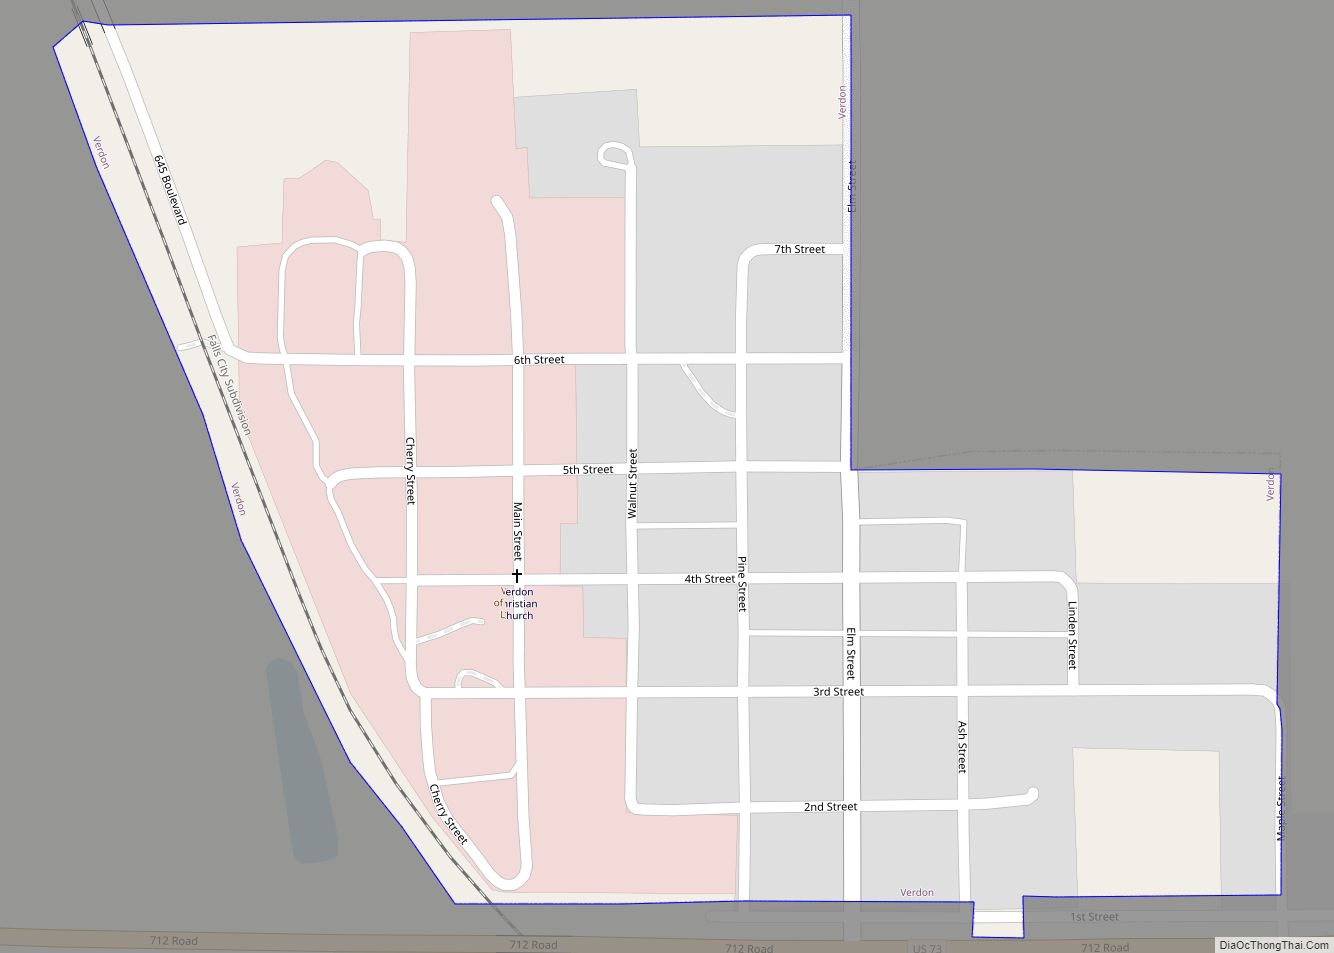 Map of Verdon village